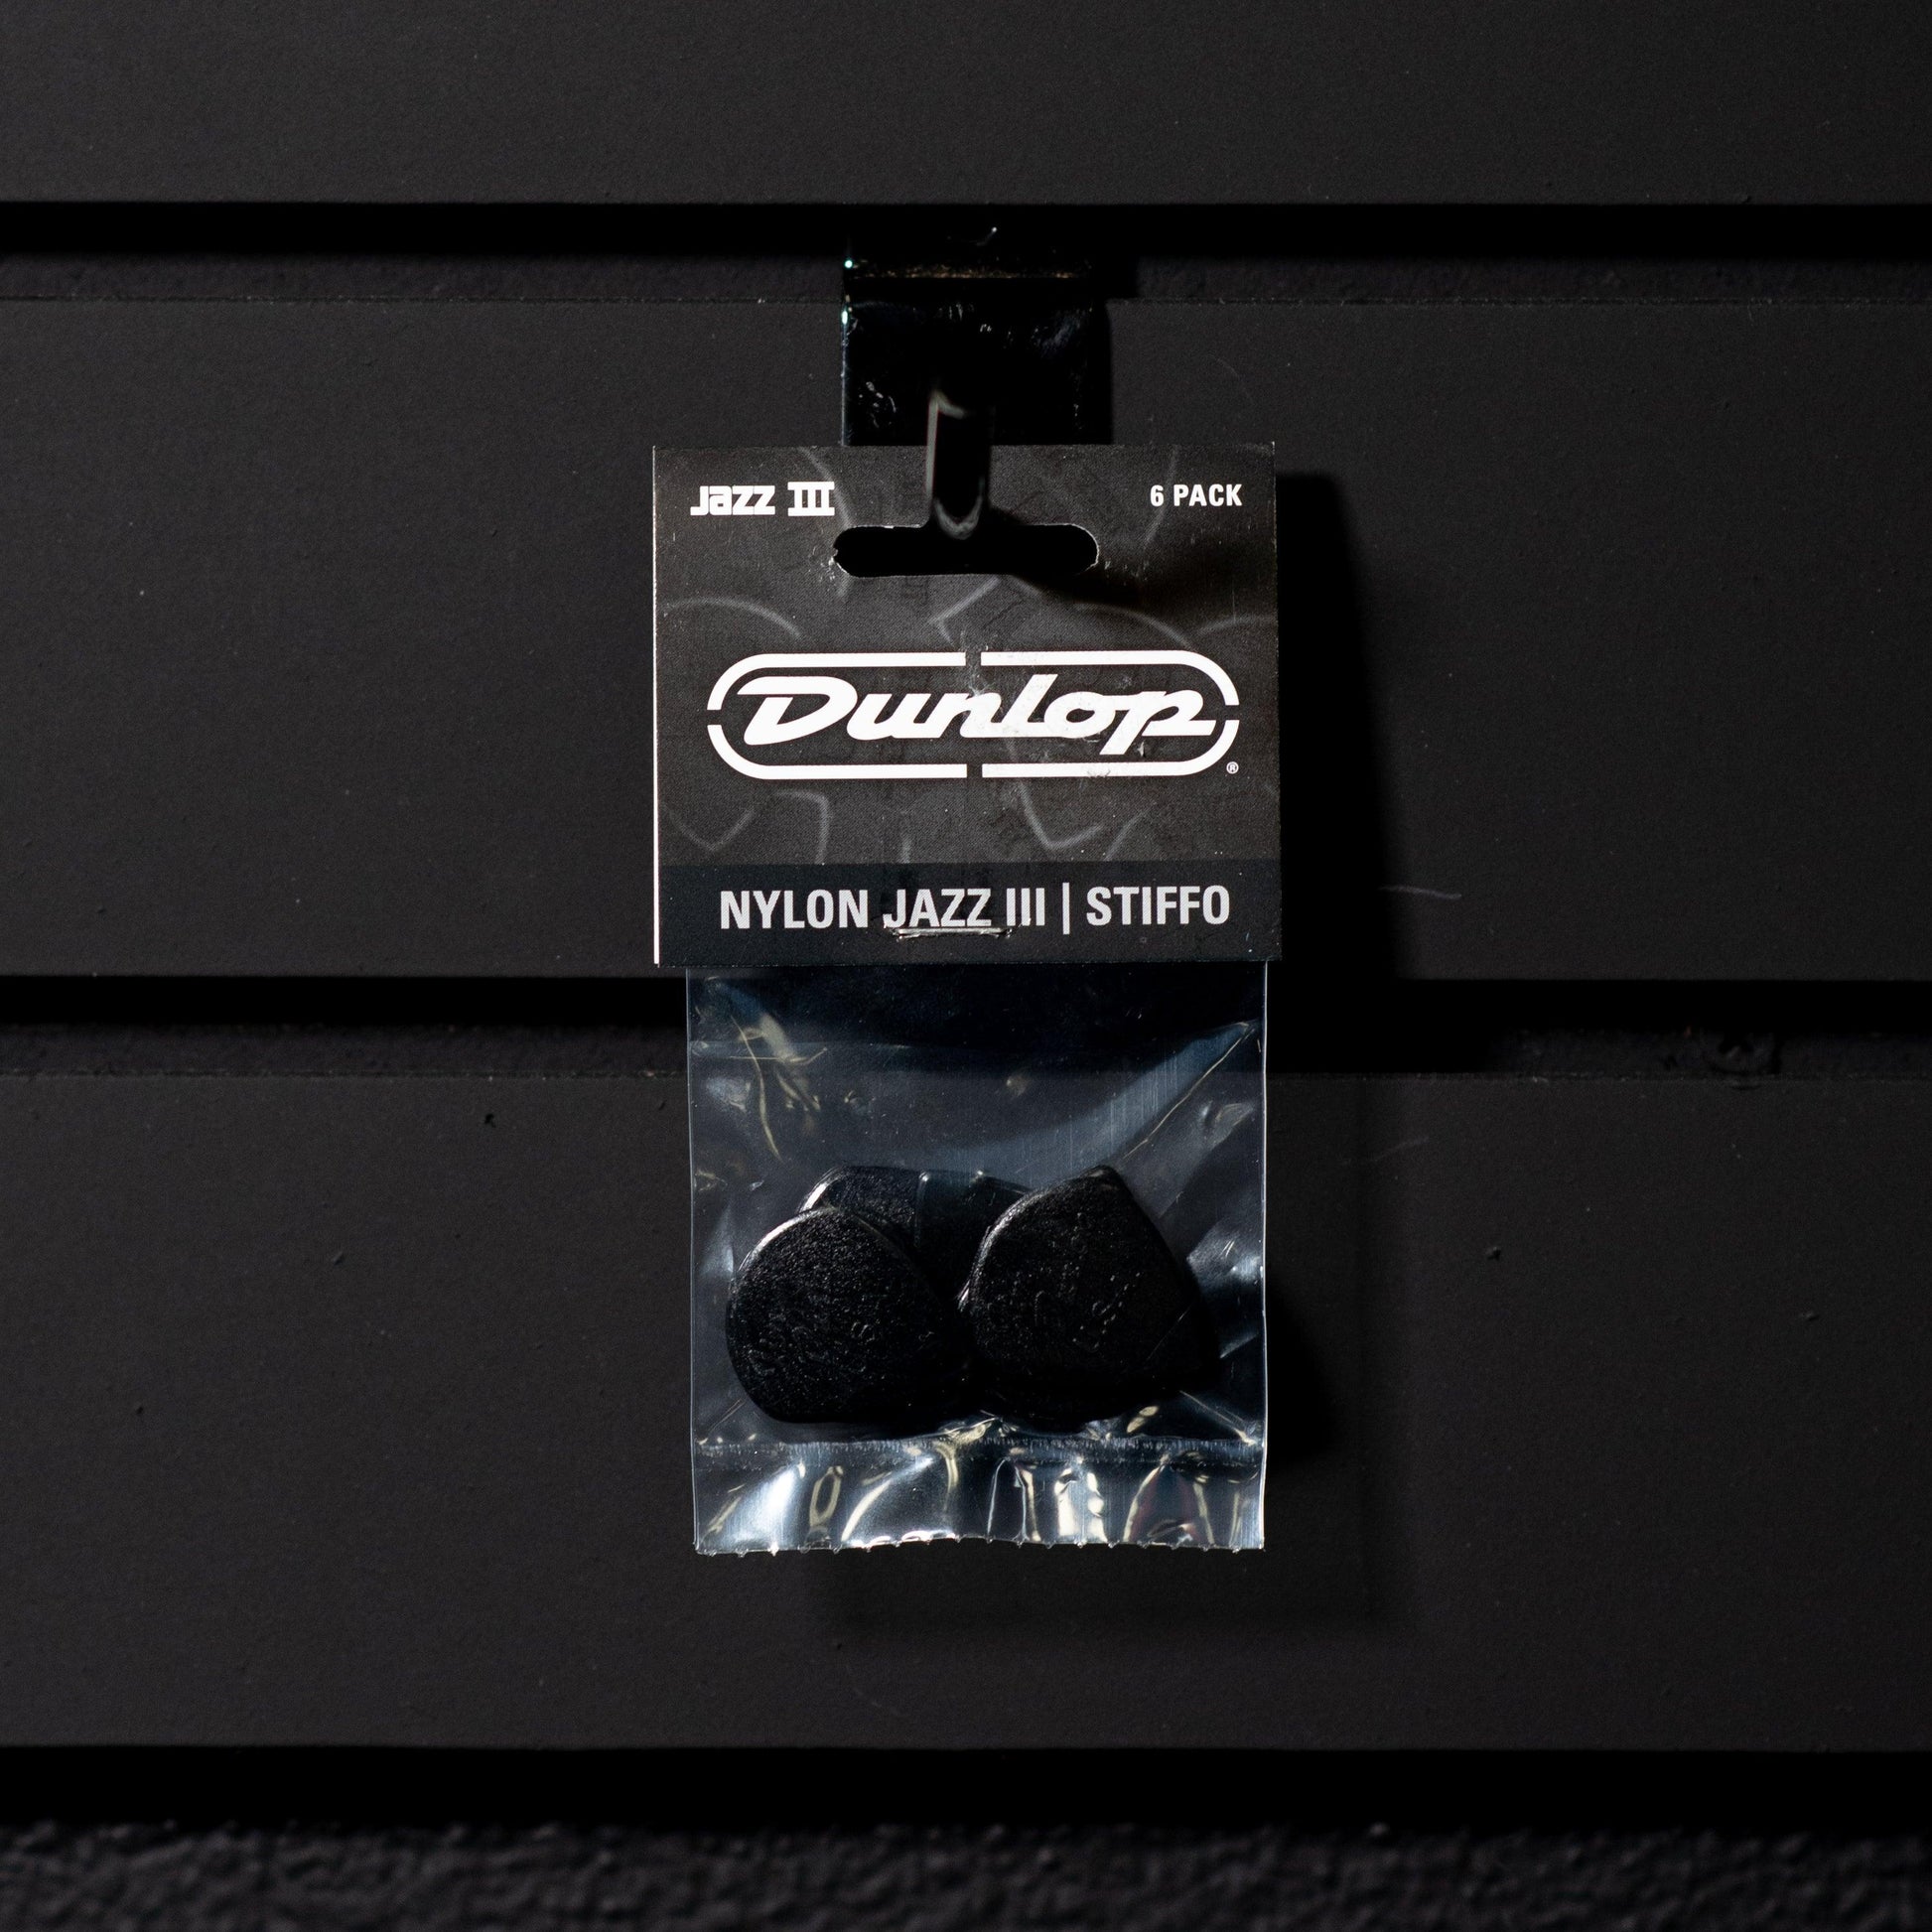 Dunlop Nylon Jazz 3 Stiffo - Impulse Music Co.